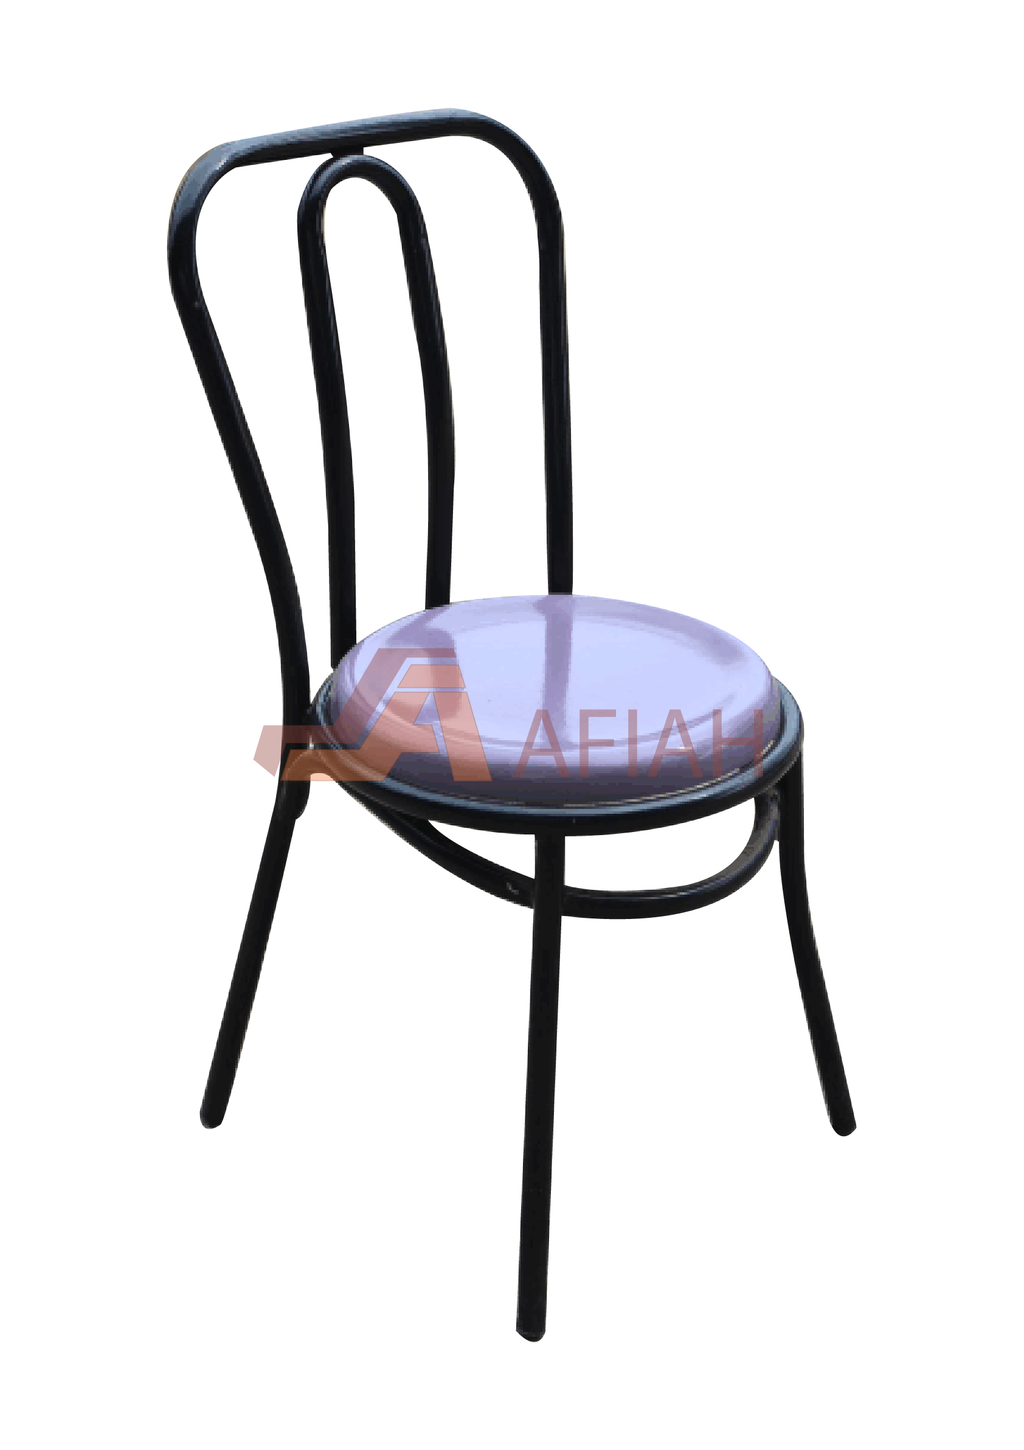 Canteen Chair (Model CA61)